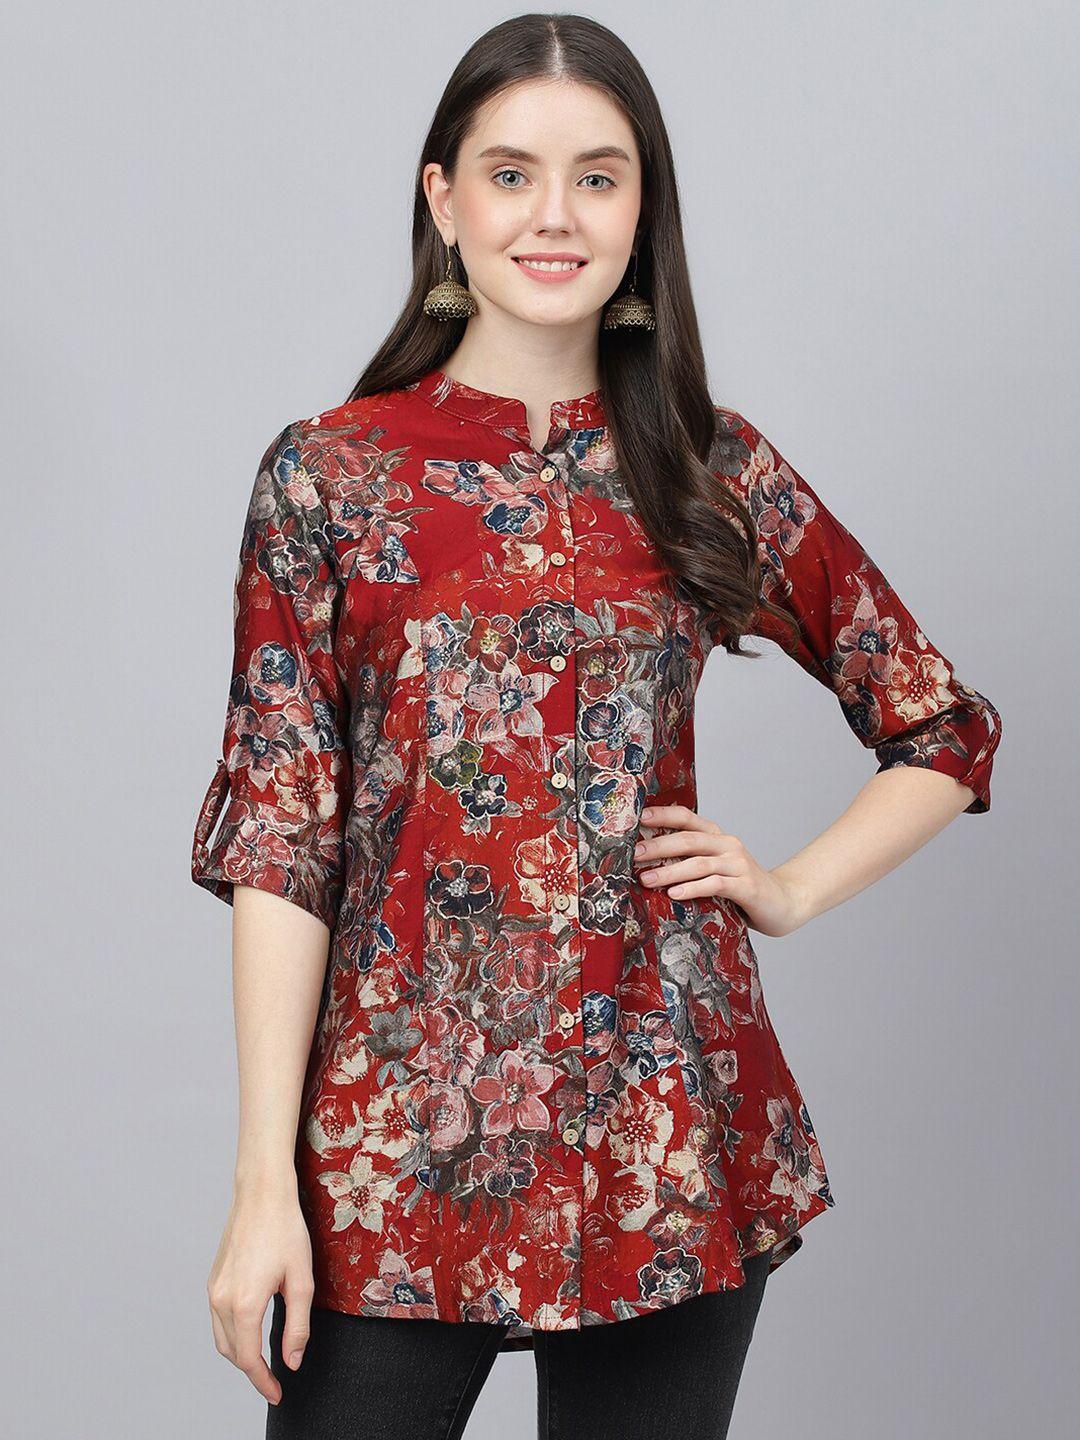 divena floral printed mandarin collar roll-up sleeves shirt style top